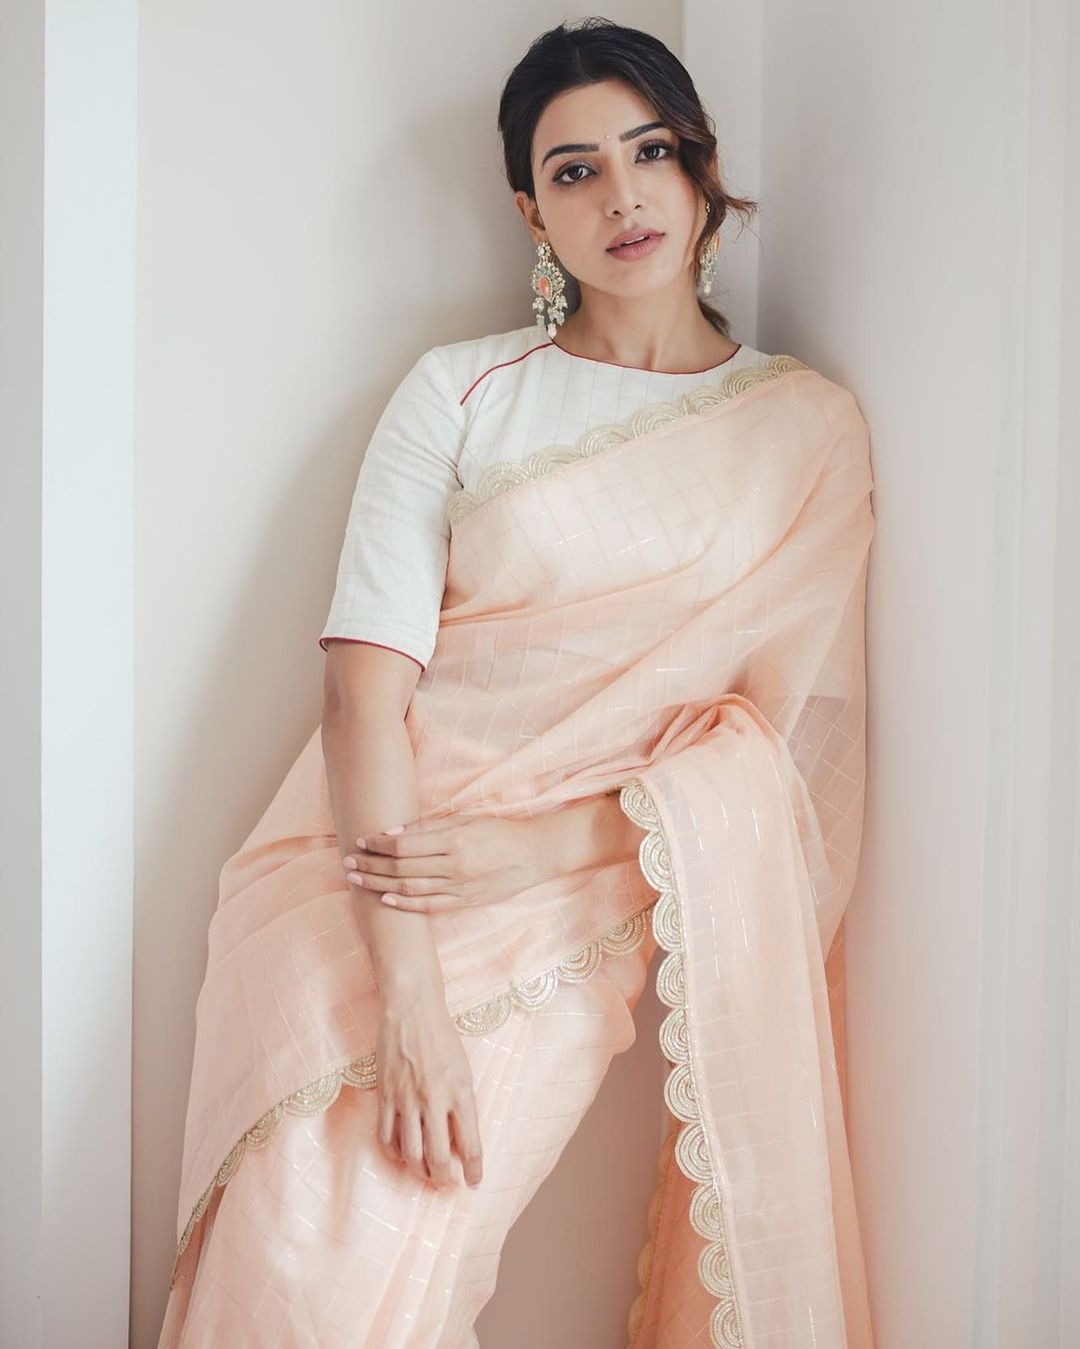 Samantha Akkineni's Diwali look in pastel saree